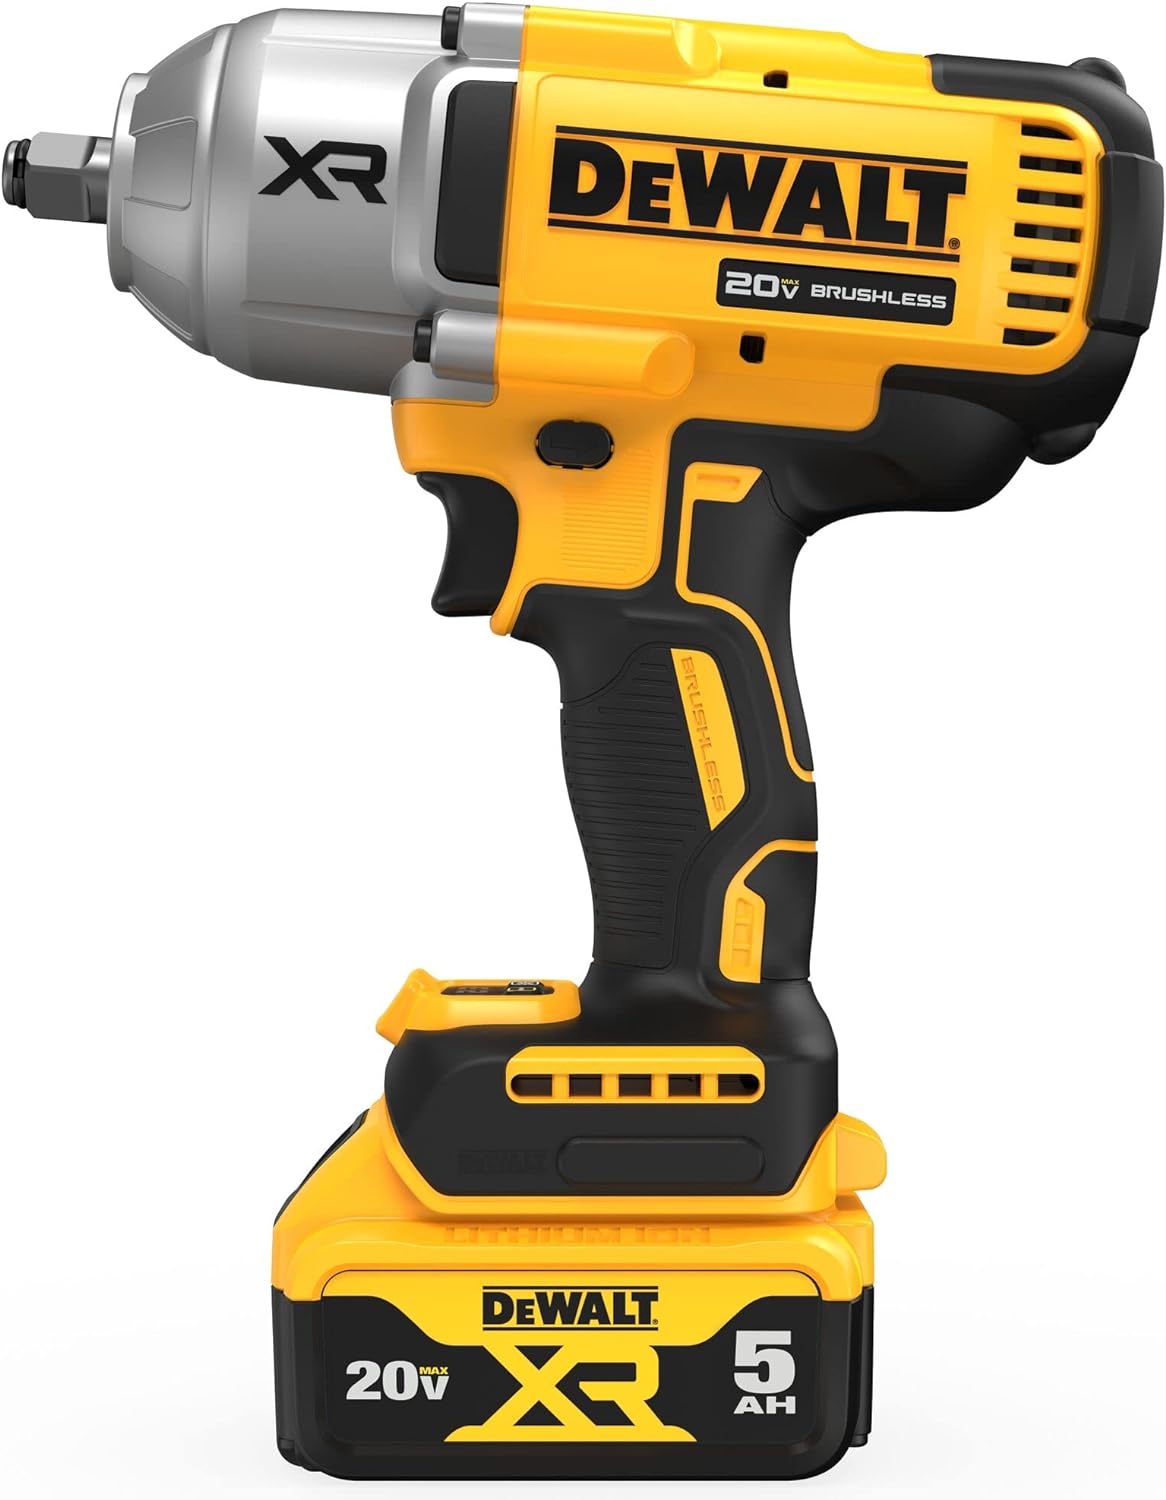 DEWALT Cordless Impact Wrench Kit Review